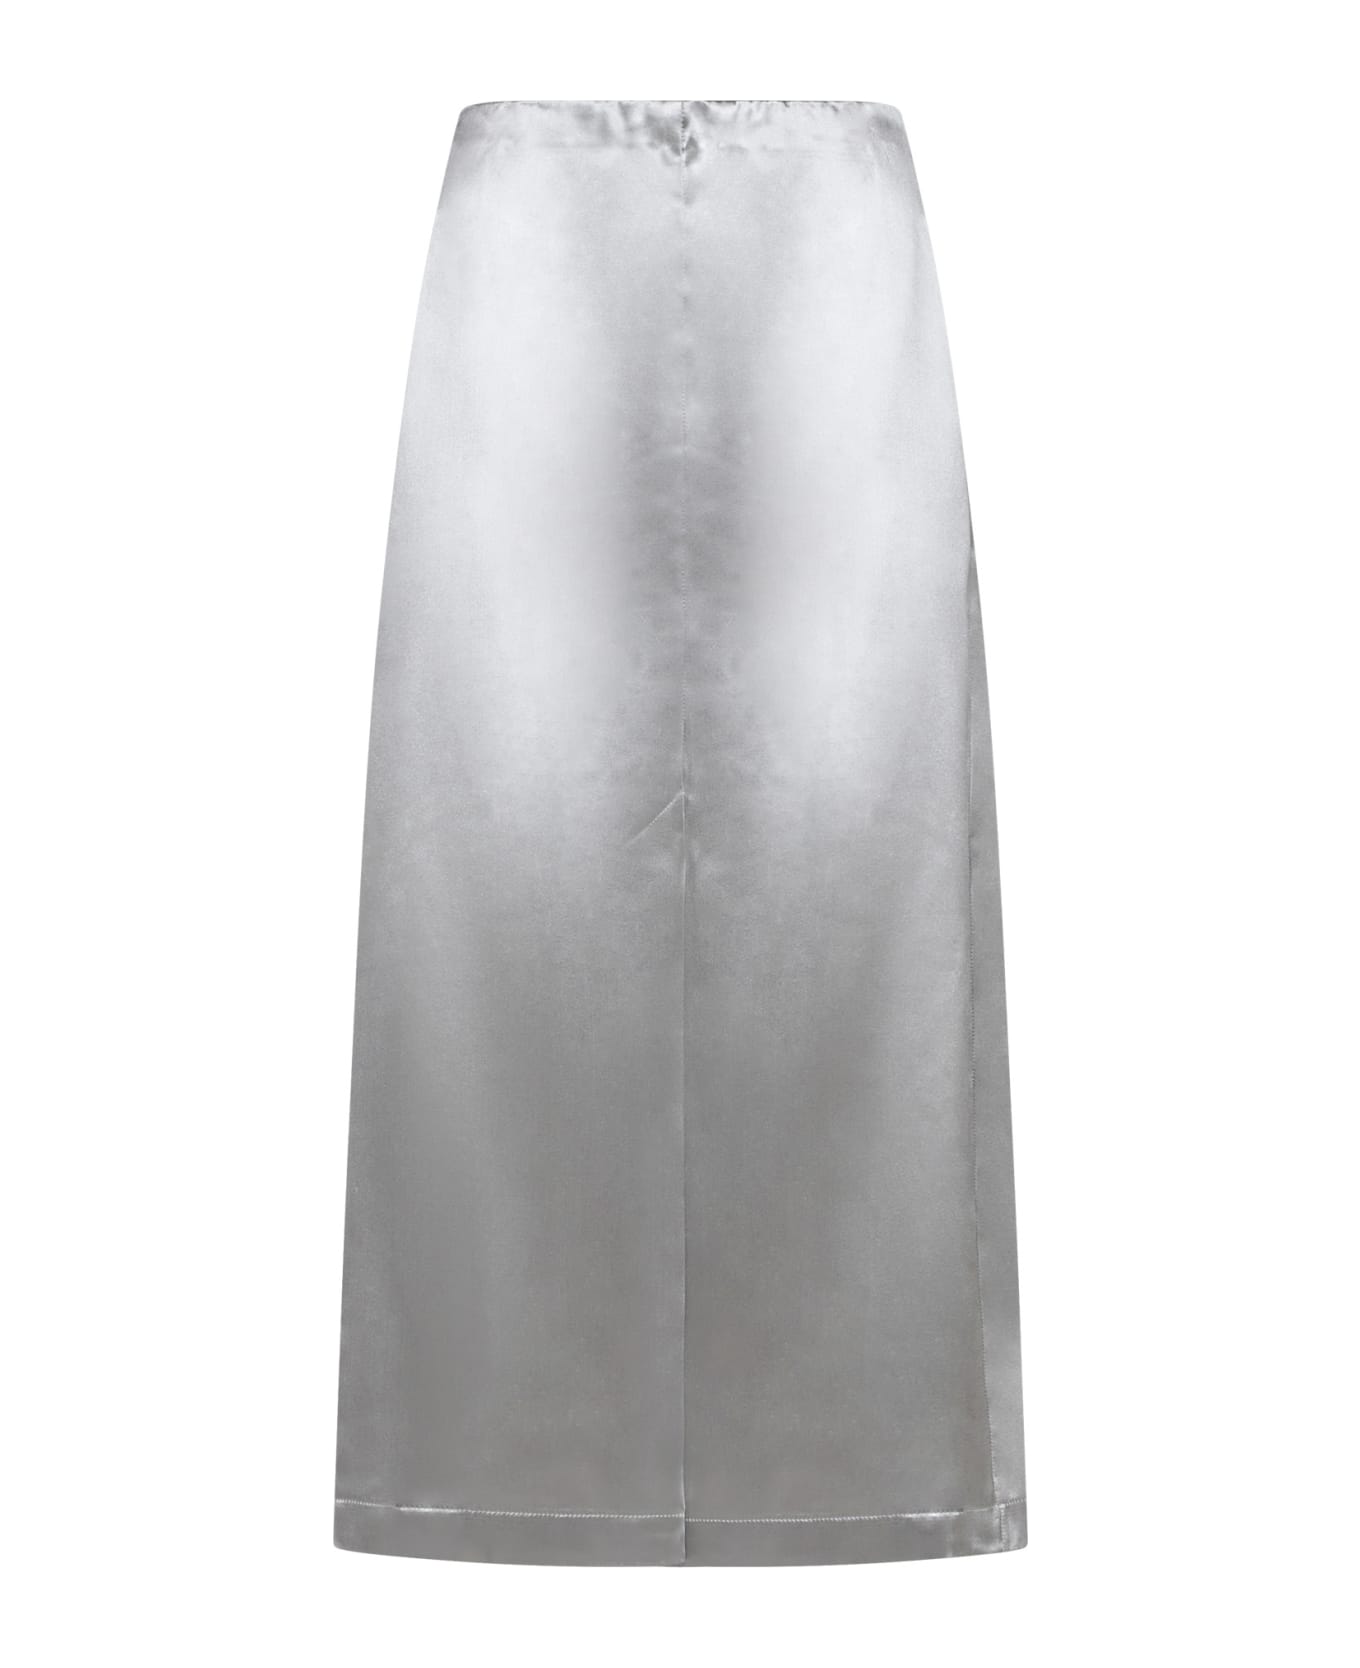 Loulou Studio Skirt - Silver grey